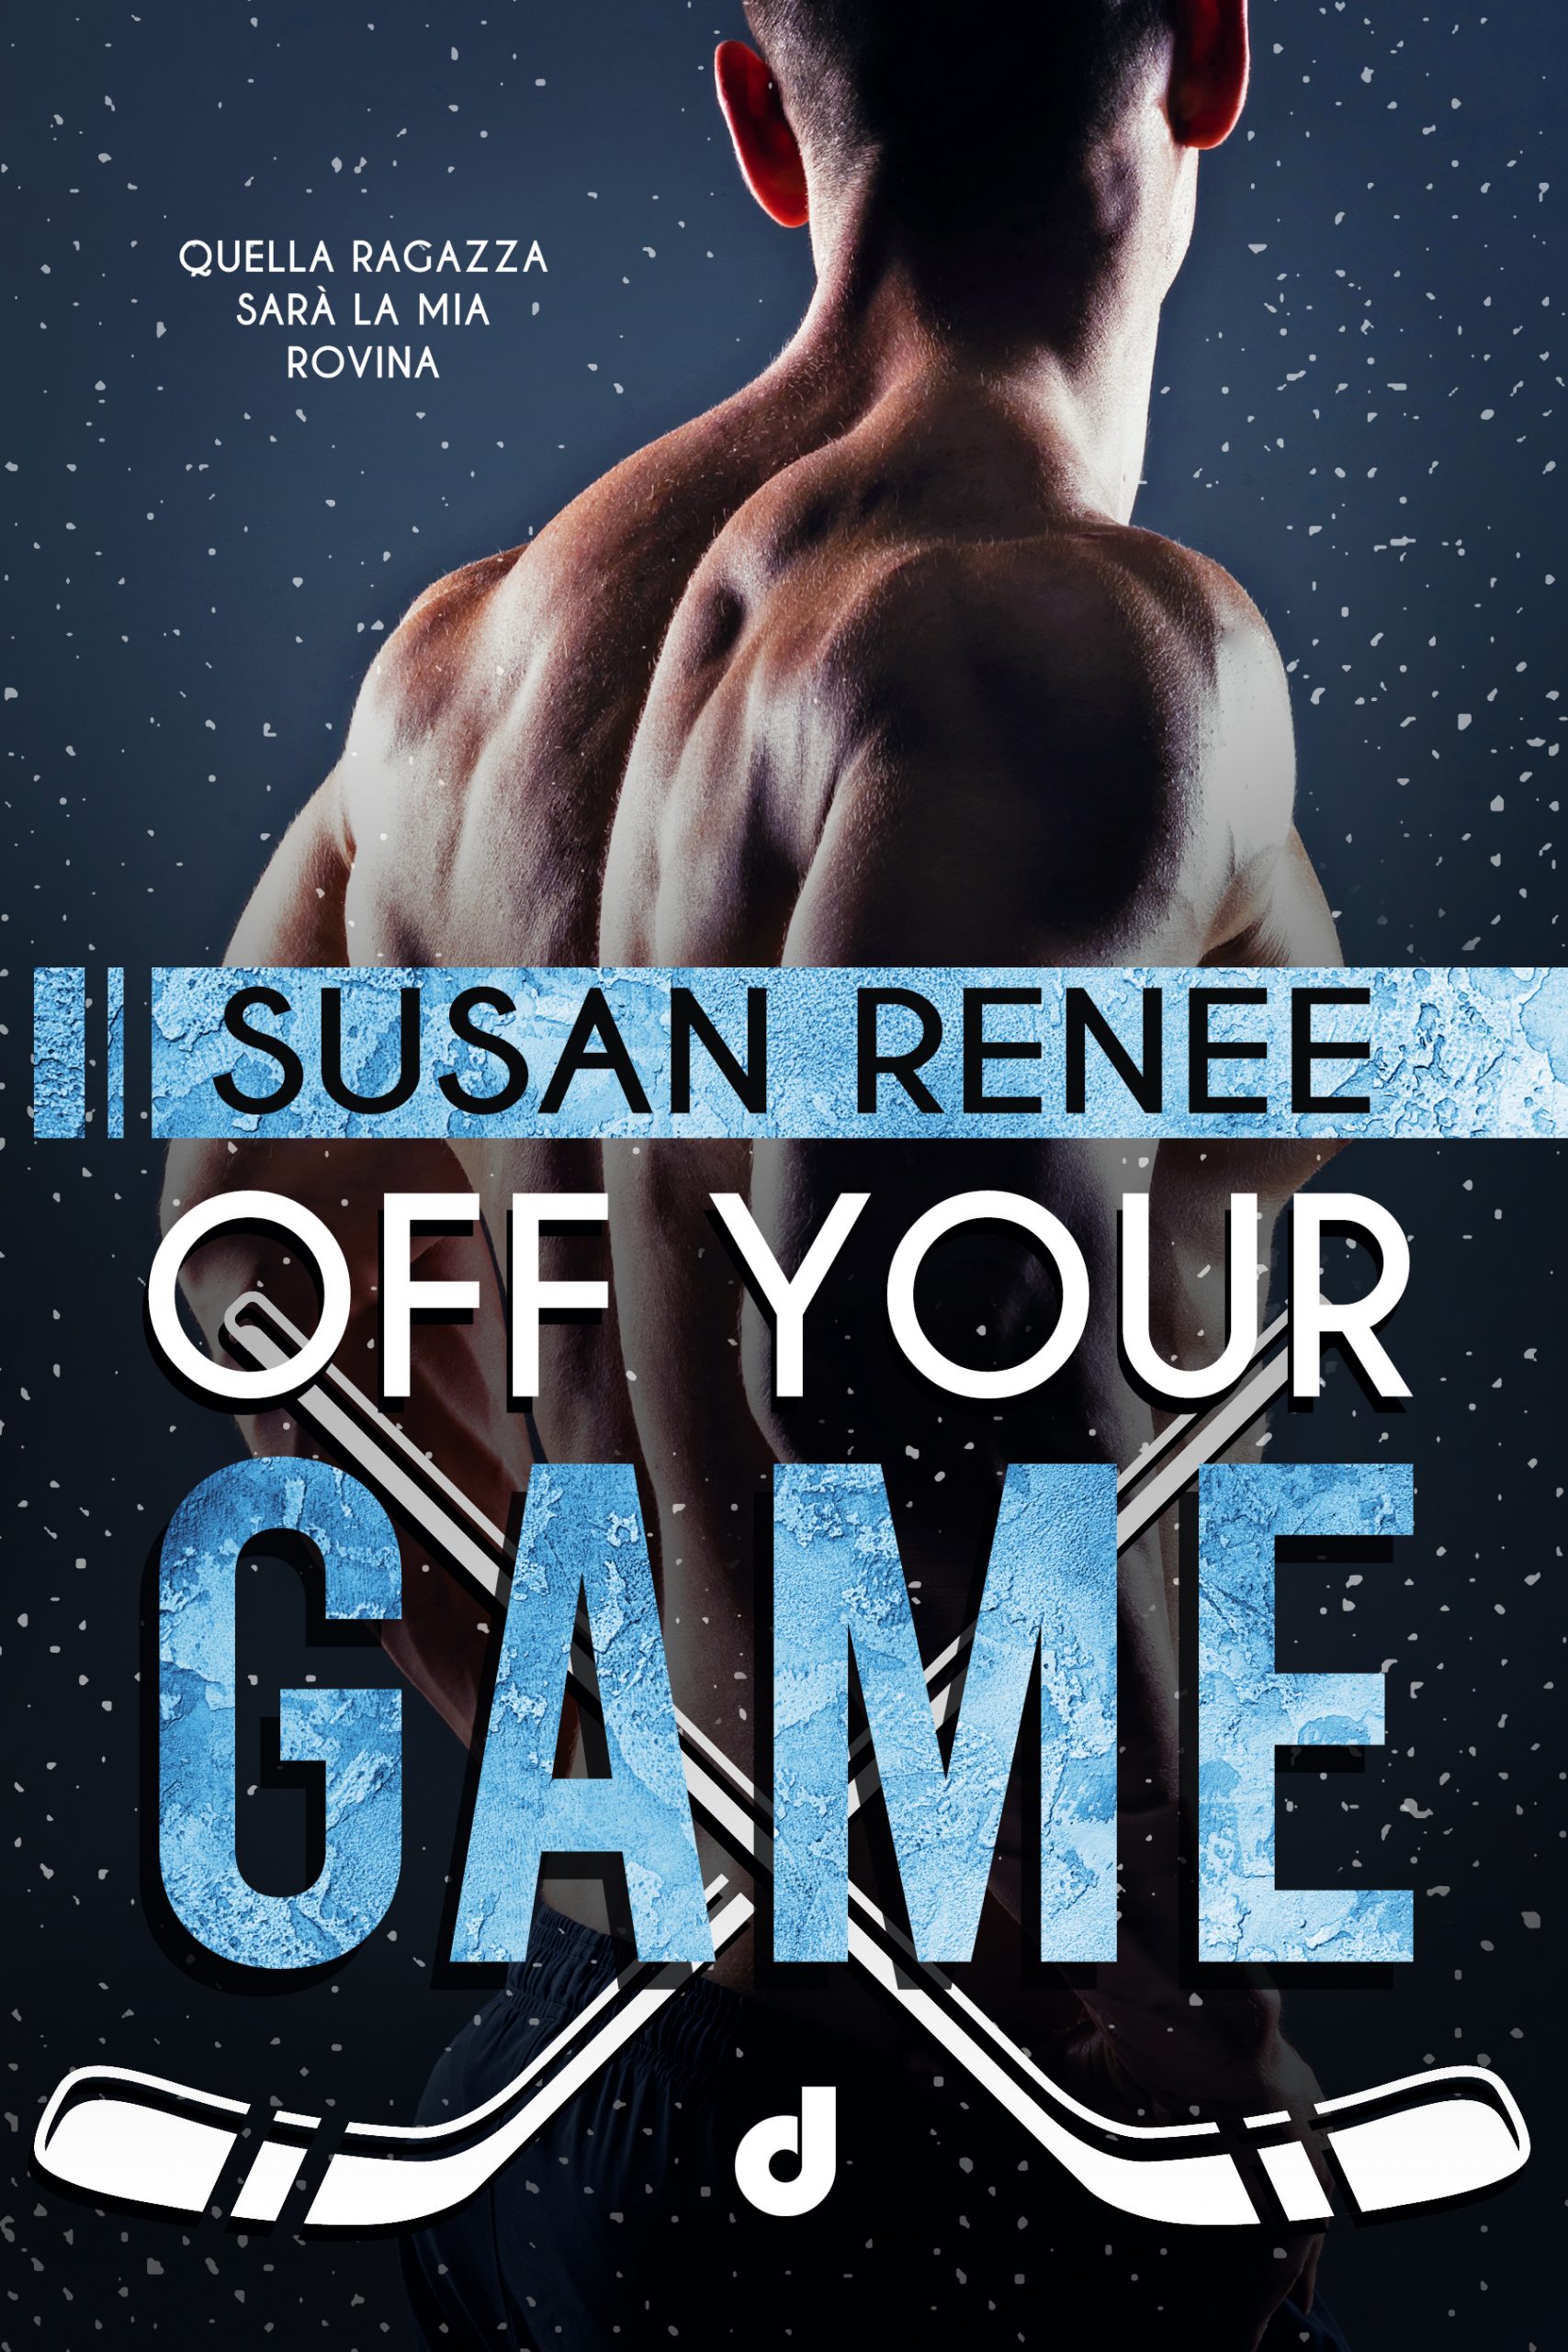 Segnalazione di uscita “OFF YOUR GAME” di Susan Renee